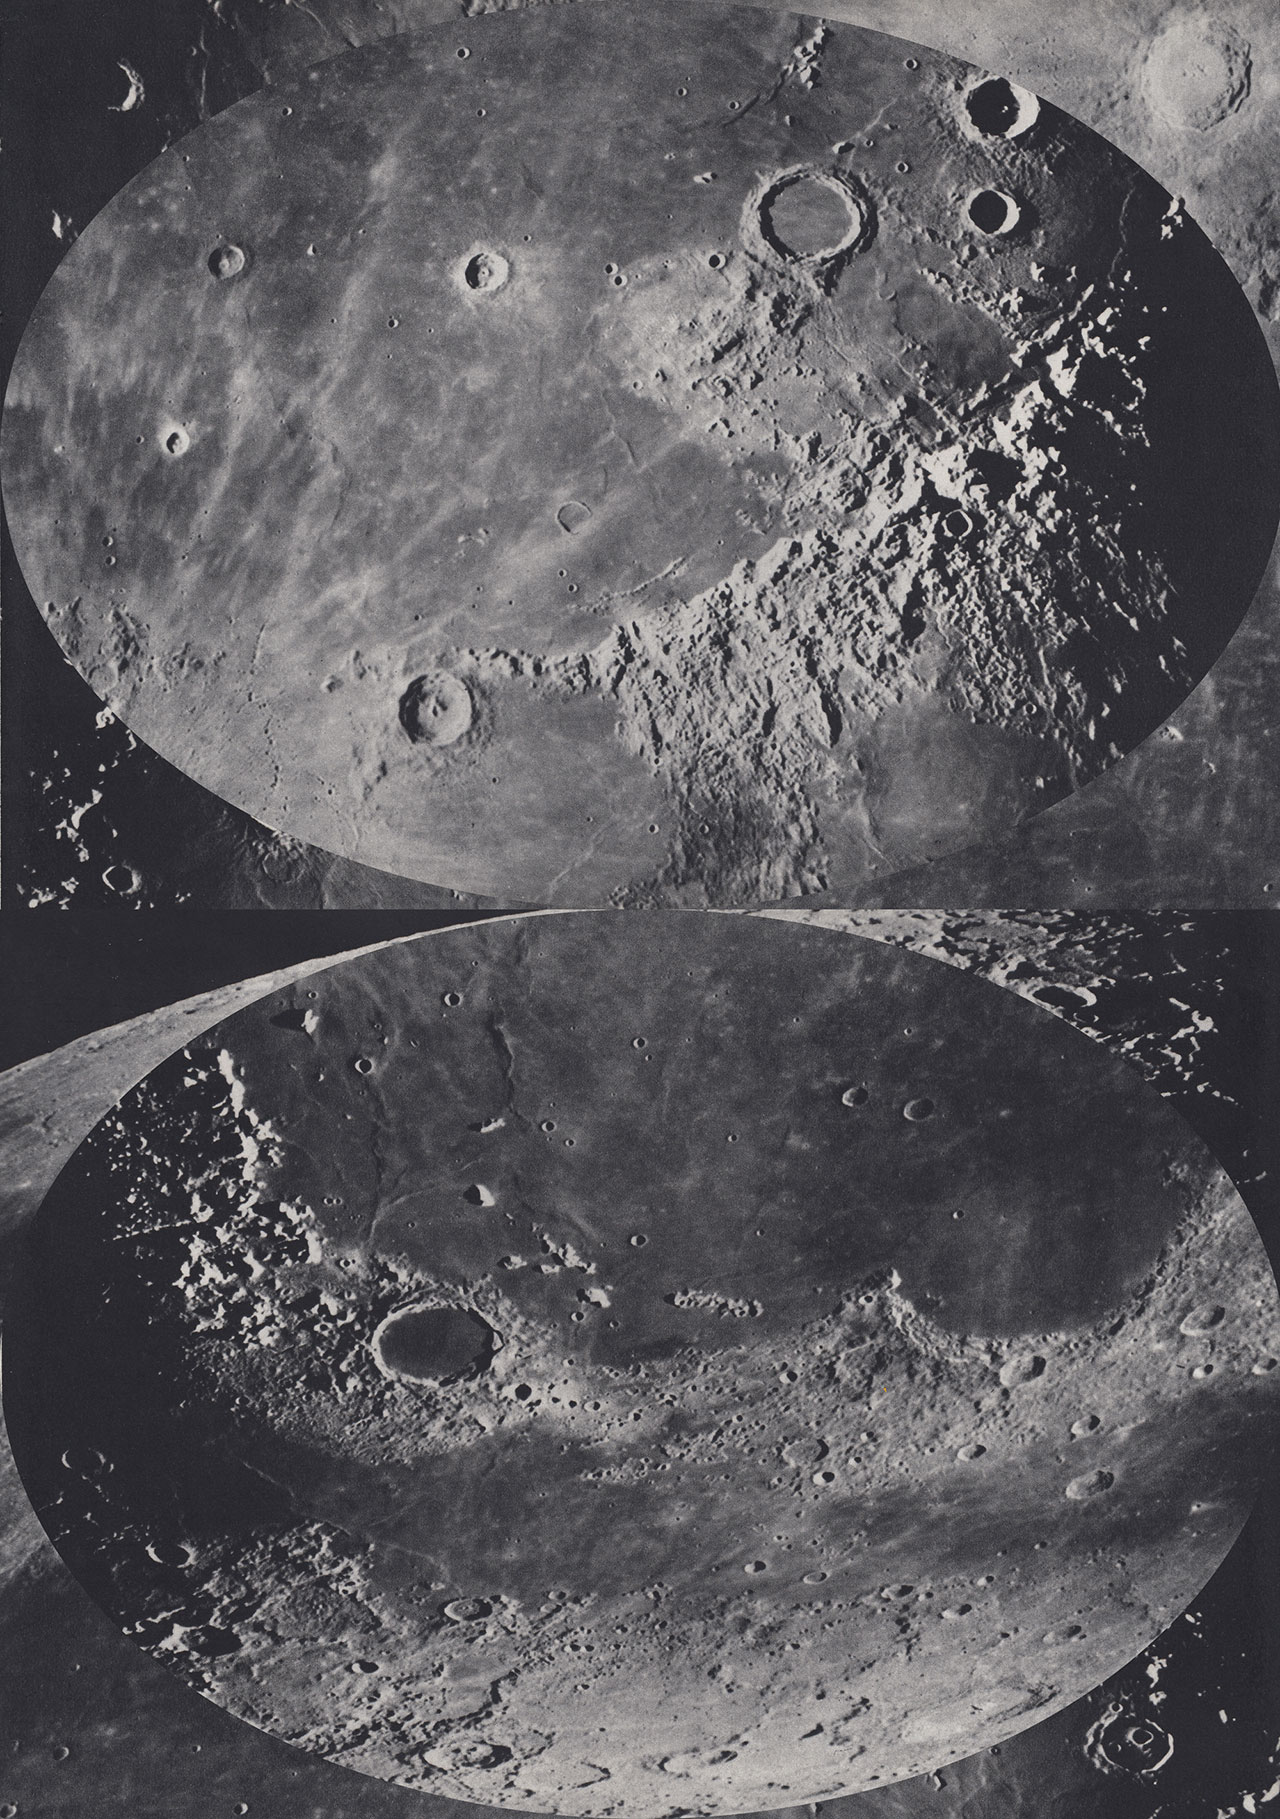 Moons series
Untitled
35x50cm
© Luis Dourado.